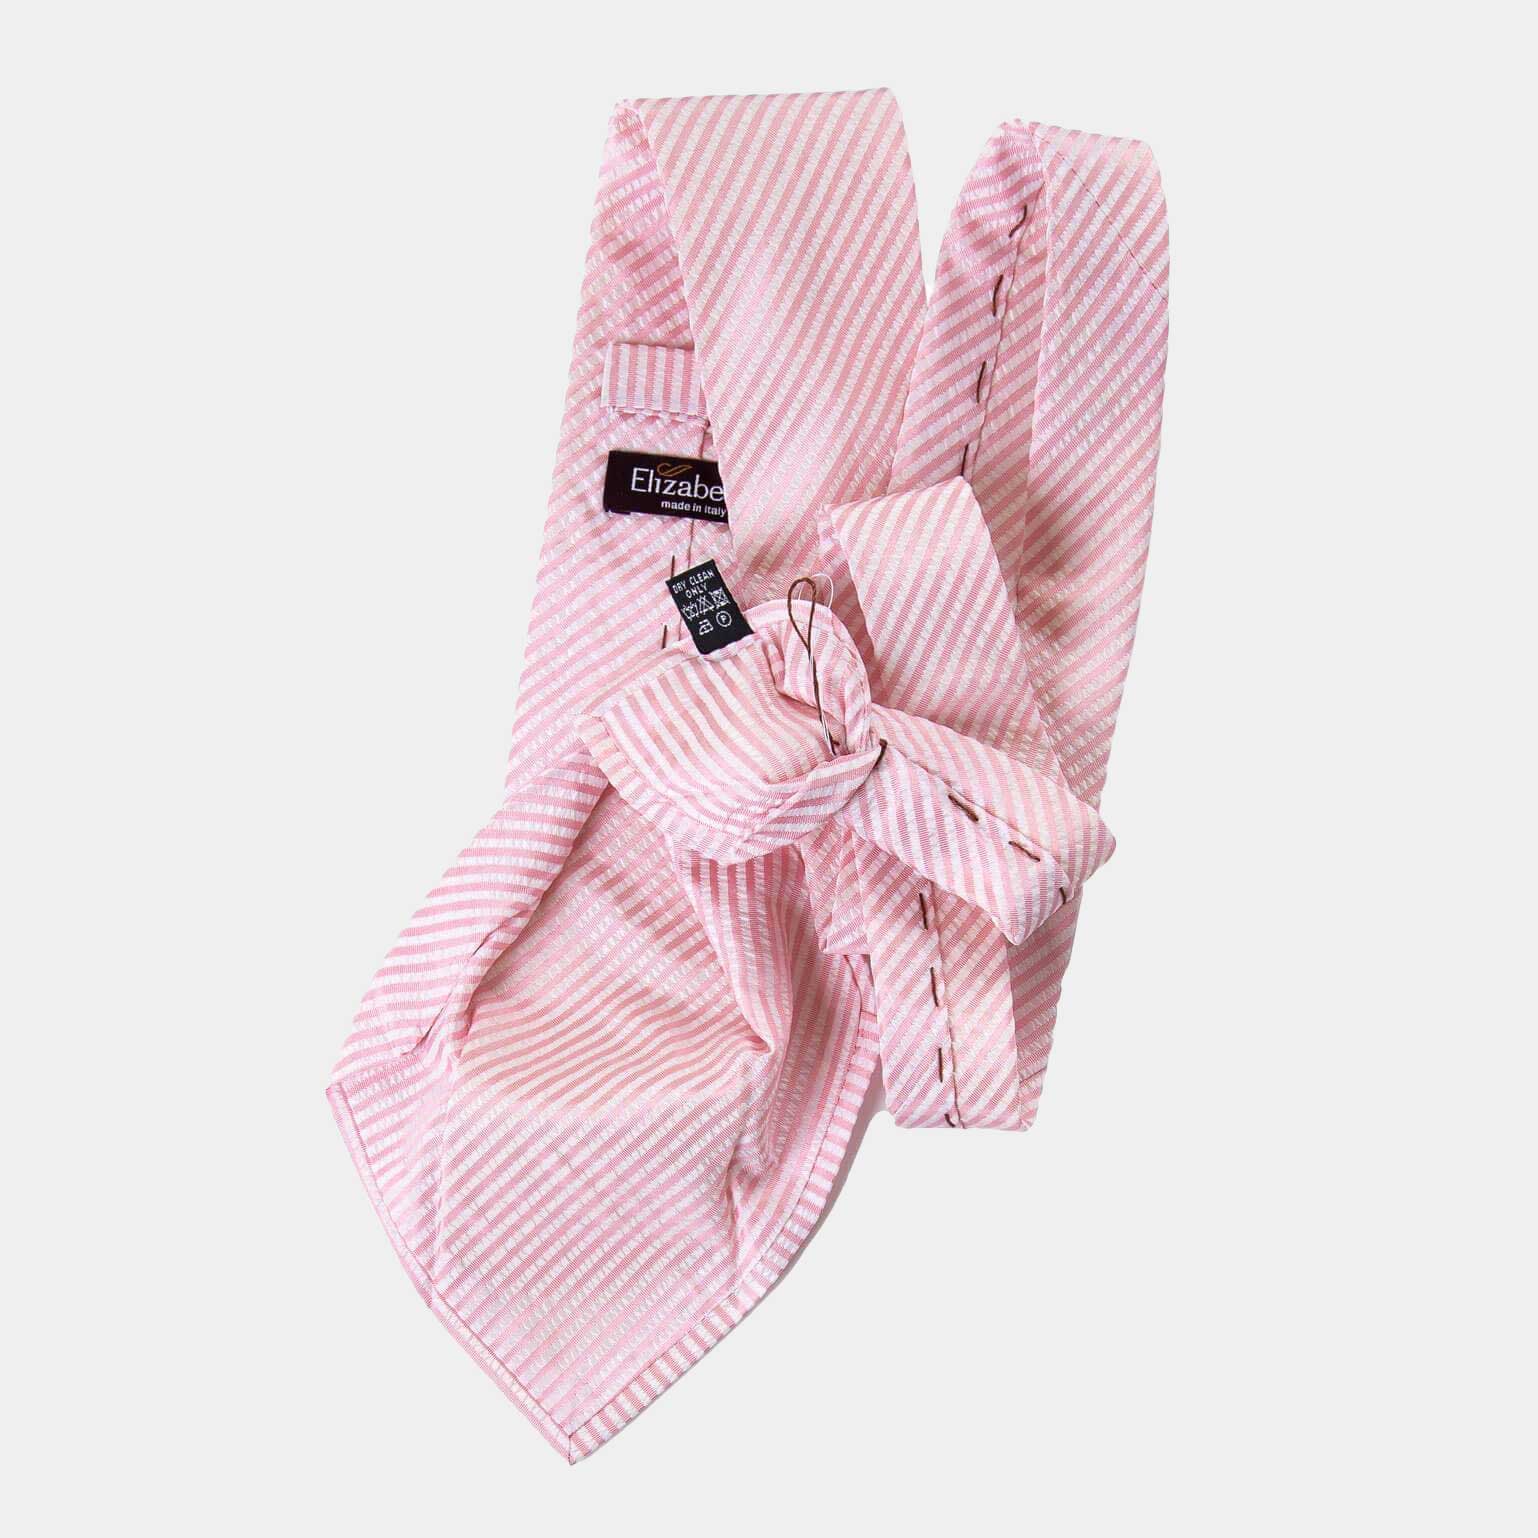 Seersucker Necktie - Pink White - Handmade Italy